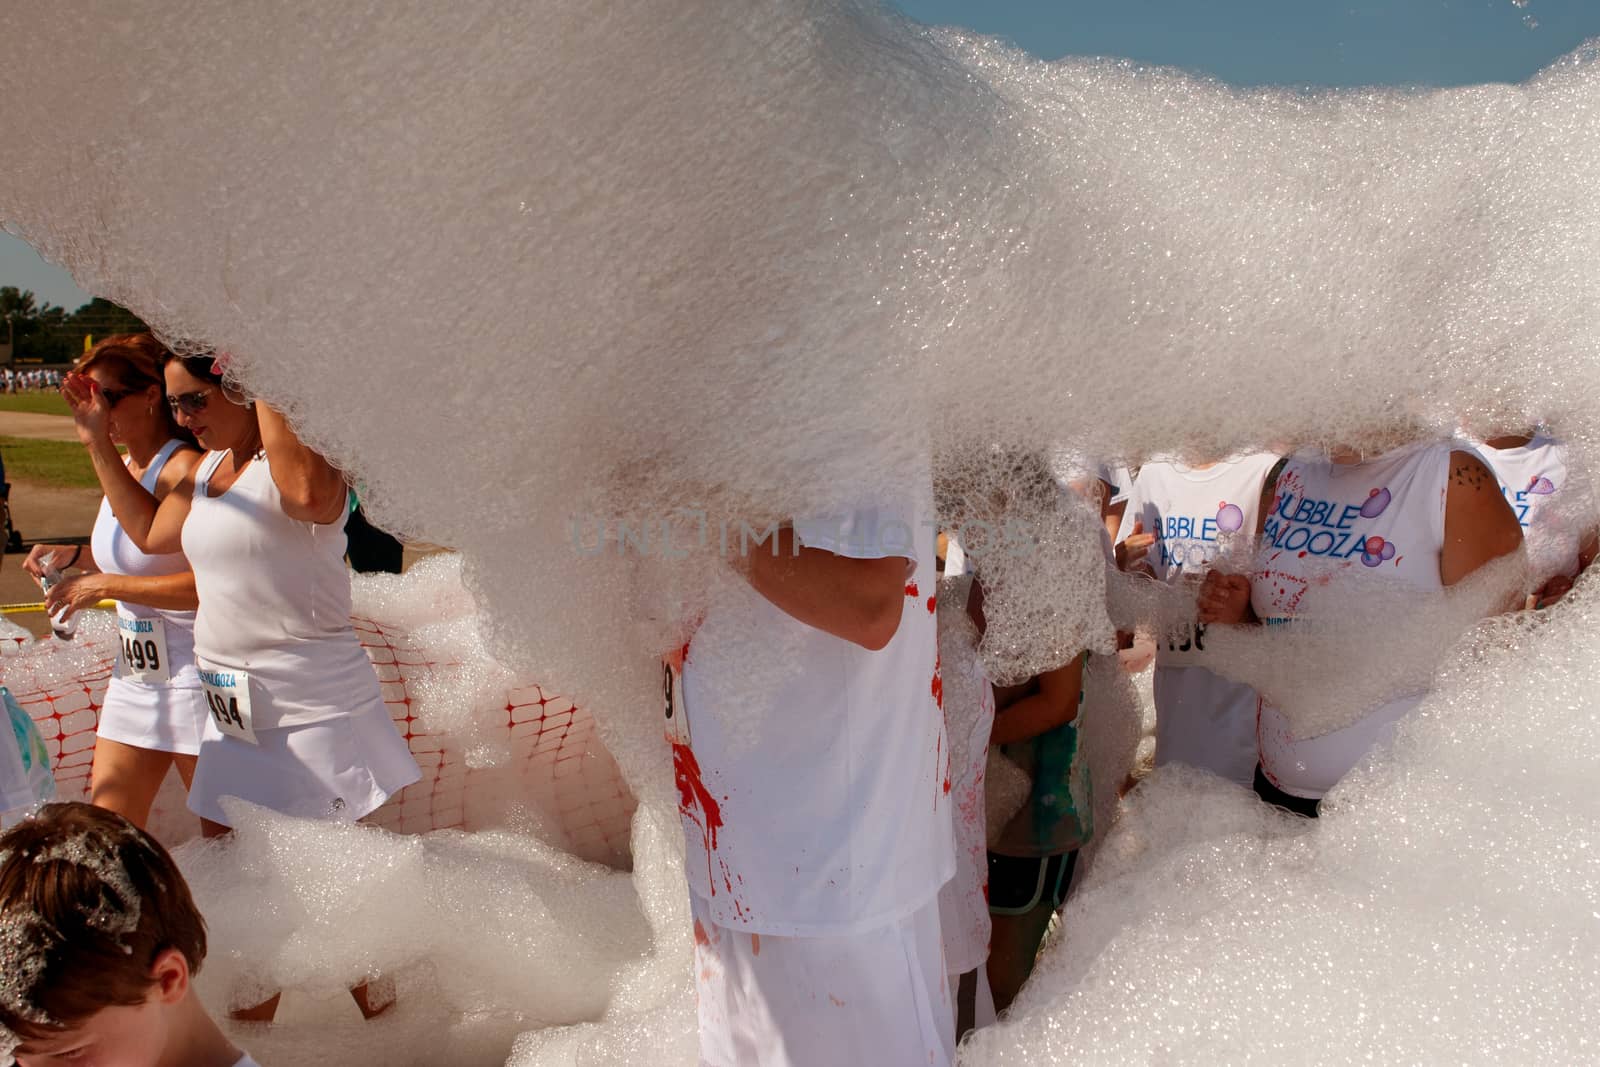 Lawrenceville, GA, USA - May 31, 2014:  People walk through a huge cloud of bubbles and foam at Bubble Palooza.